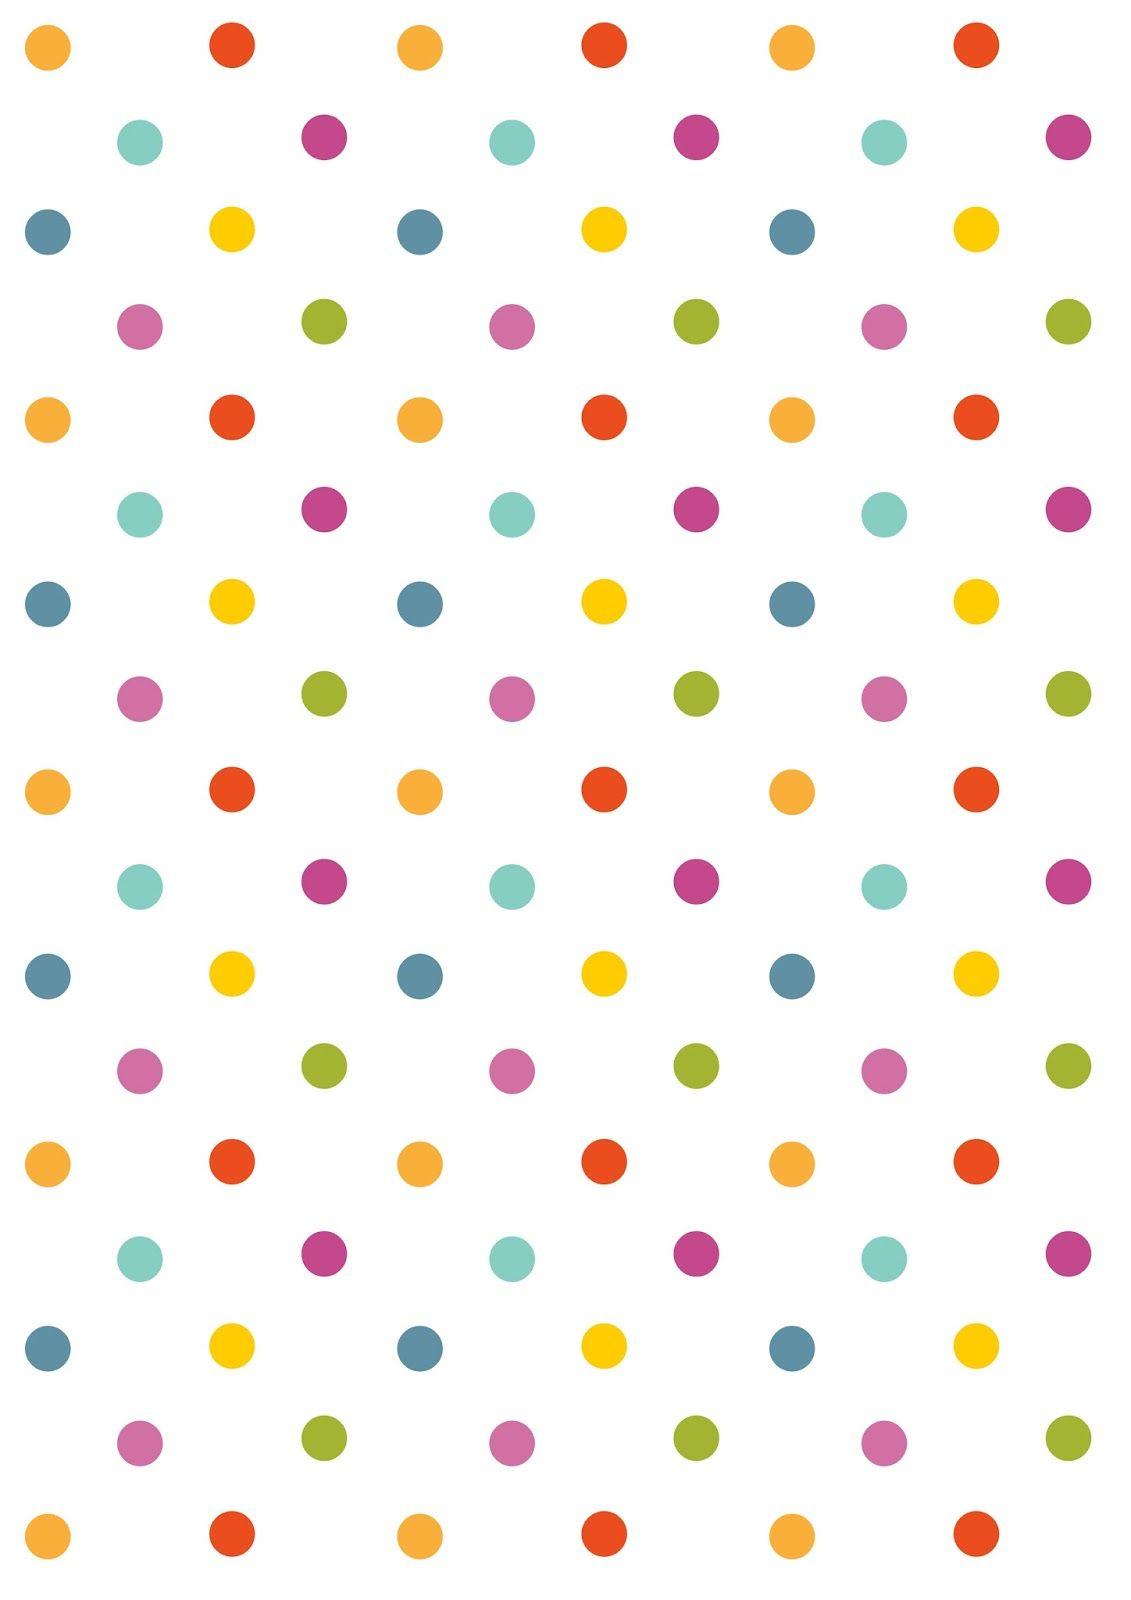 Rainbow Polka Dot Wallpaper Clipart. Free download best Rainbow